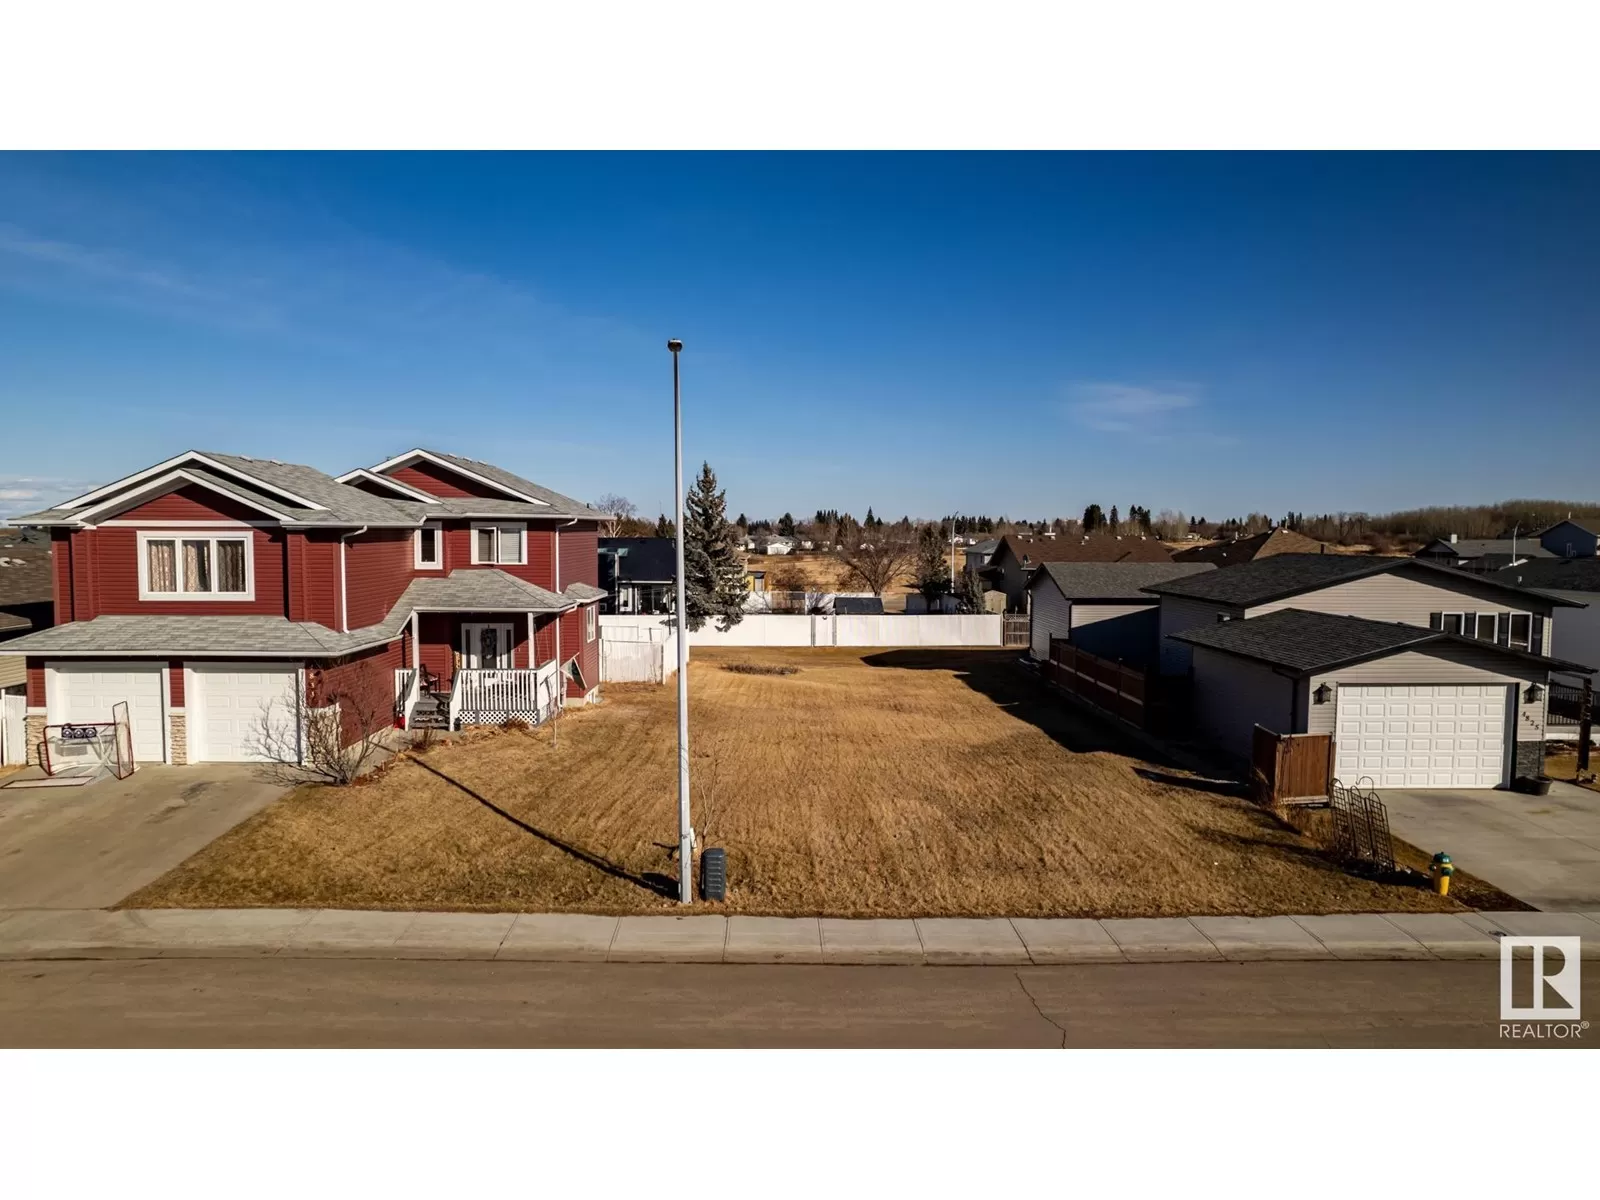 No Building for rent: 4829 55 St, Bruderheim, Alberta T0B 0S0